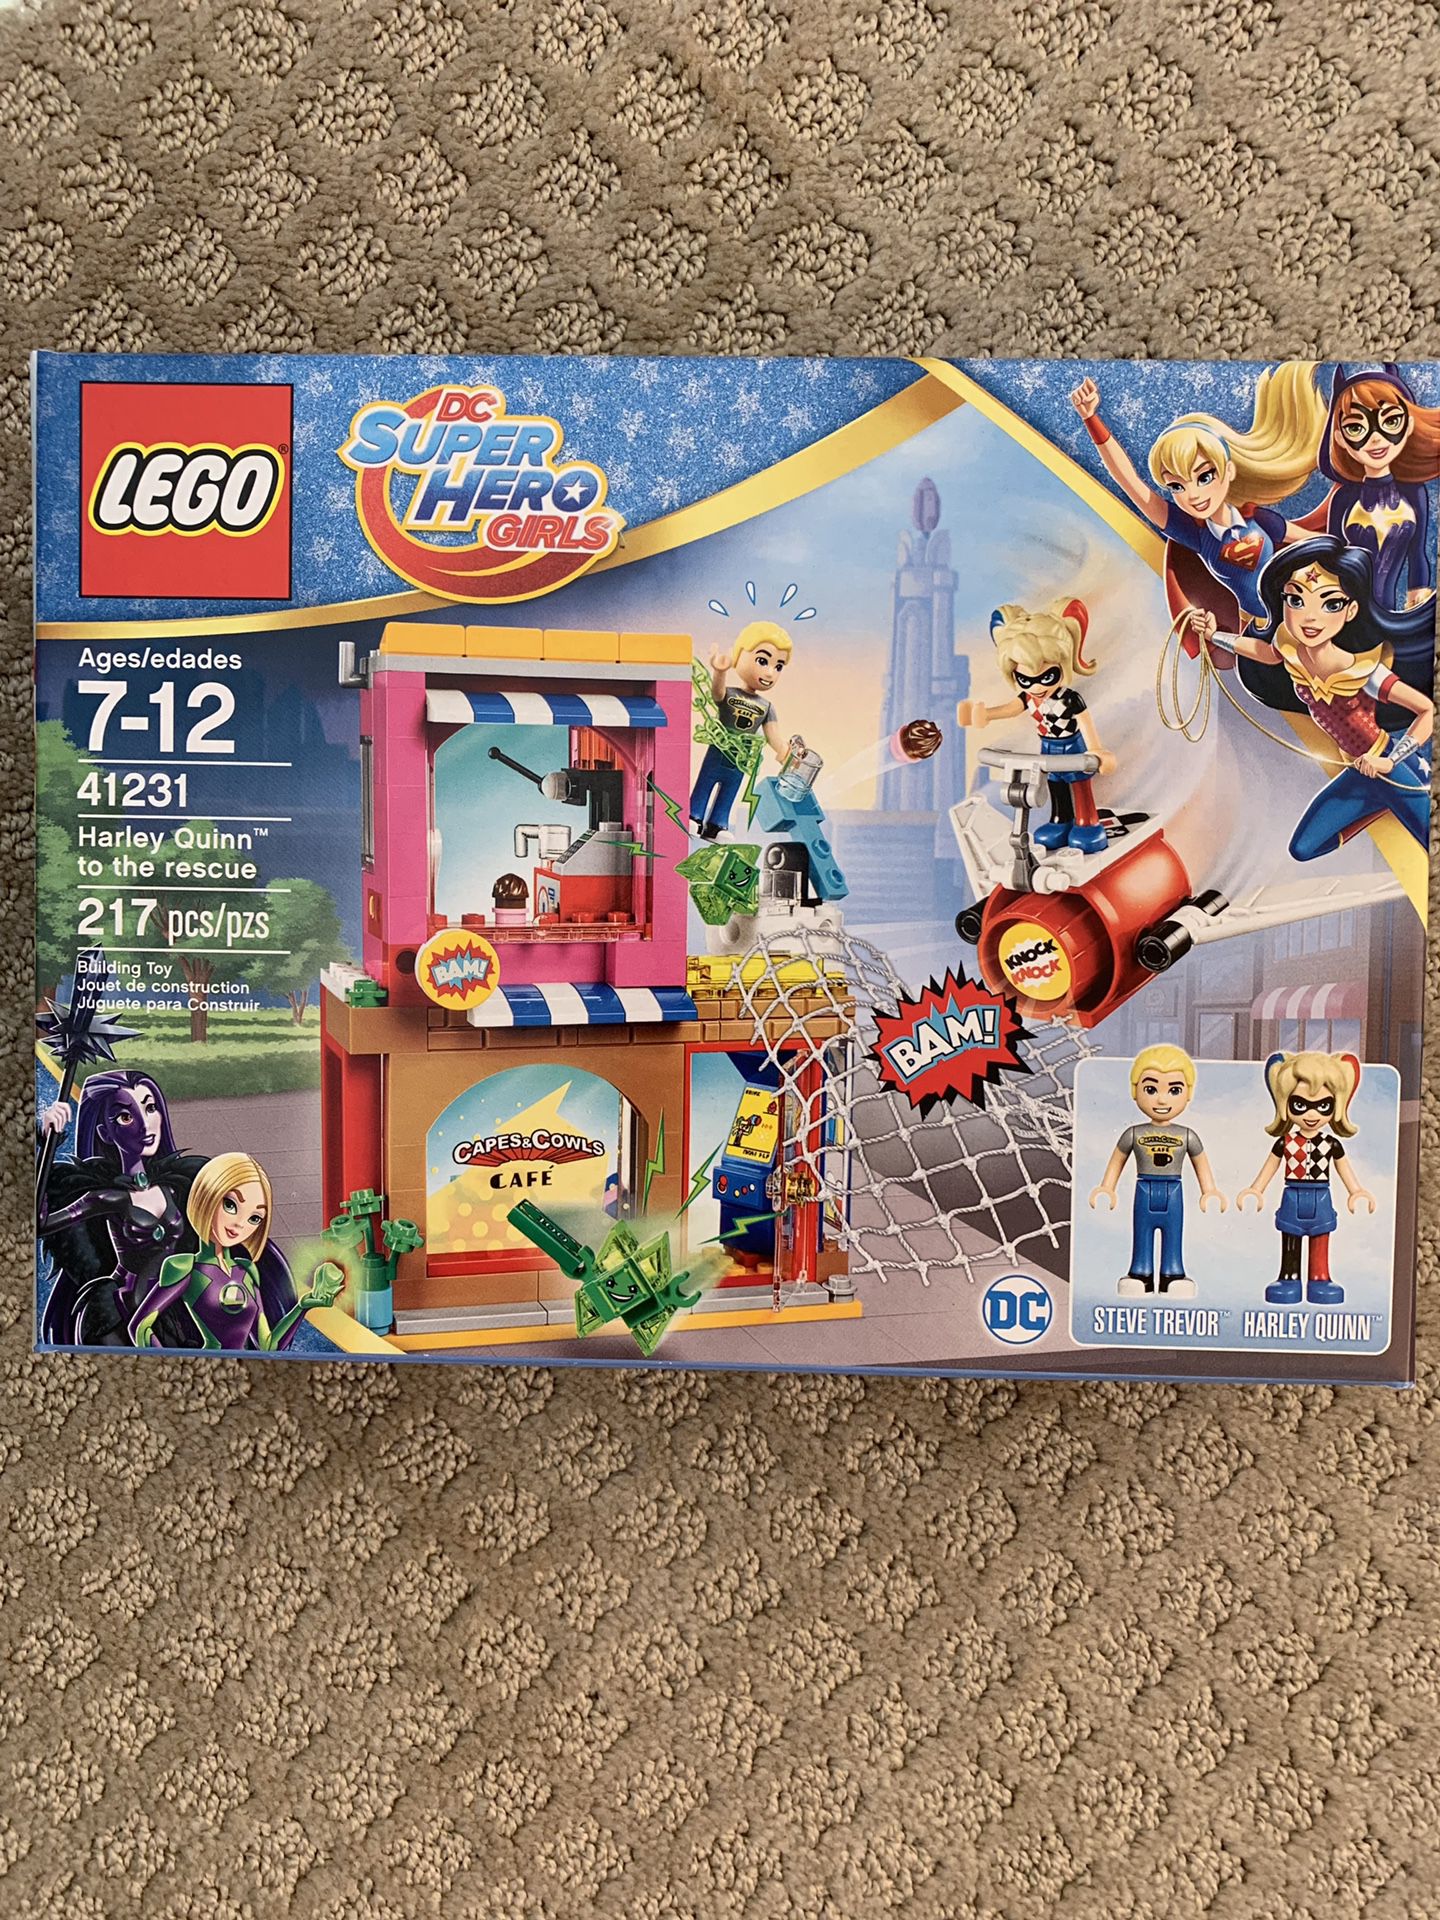 LEGO-super hero girls (217 pcs)